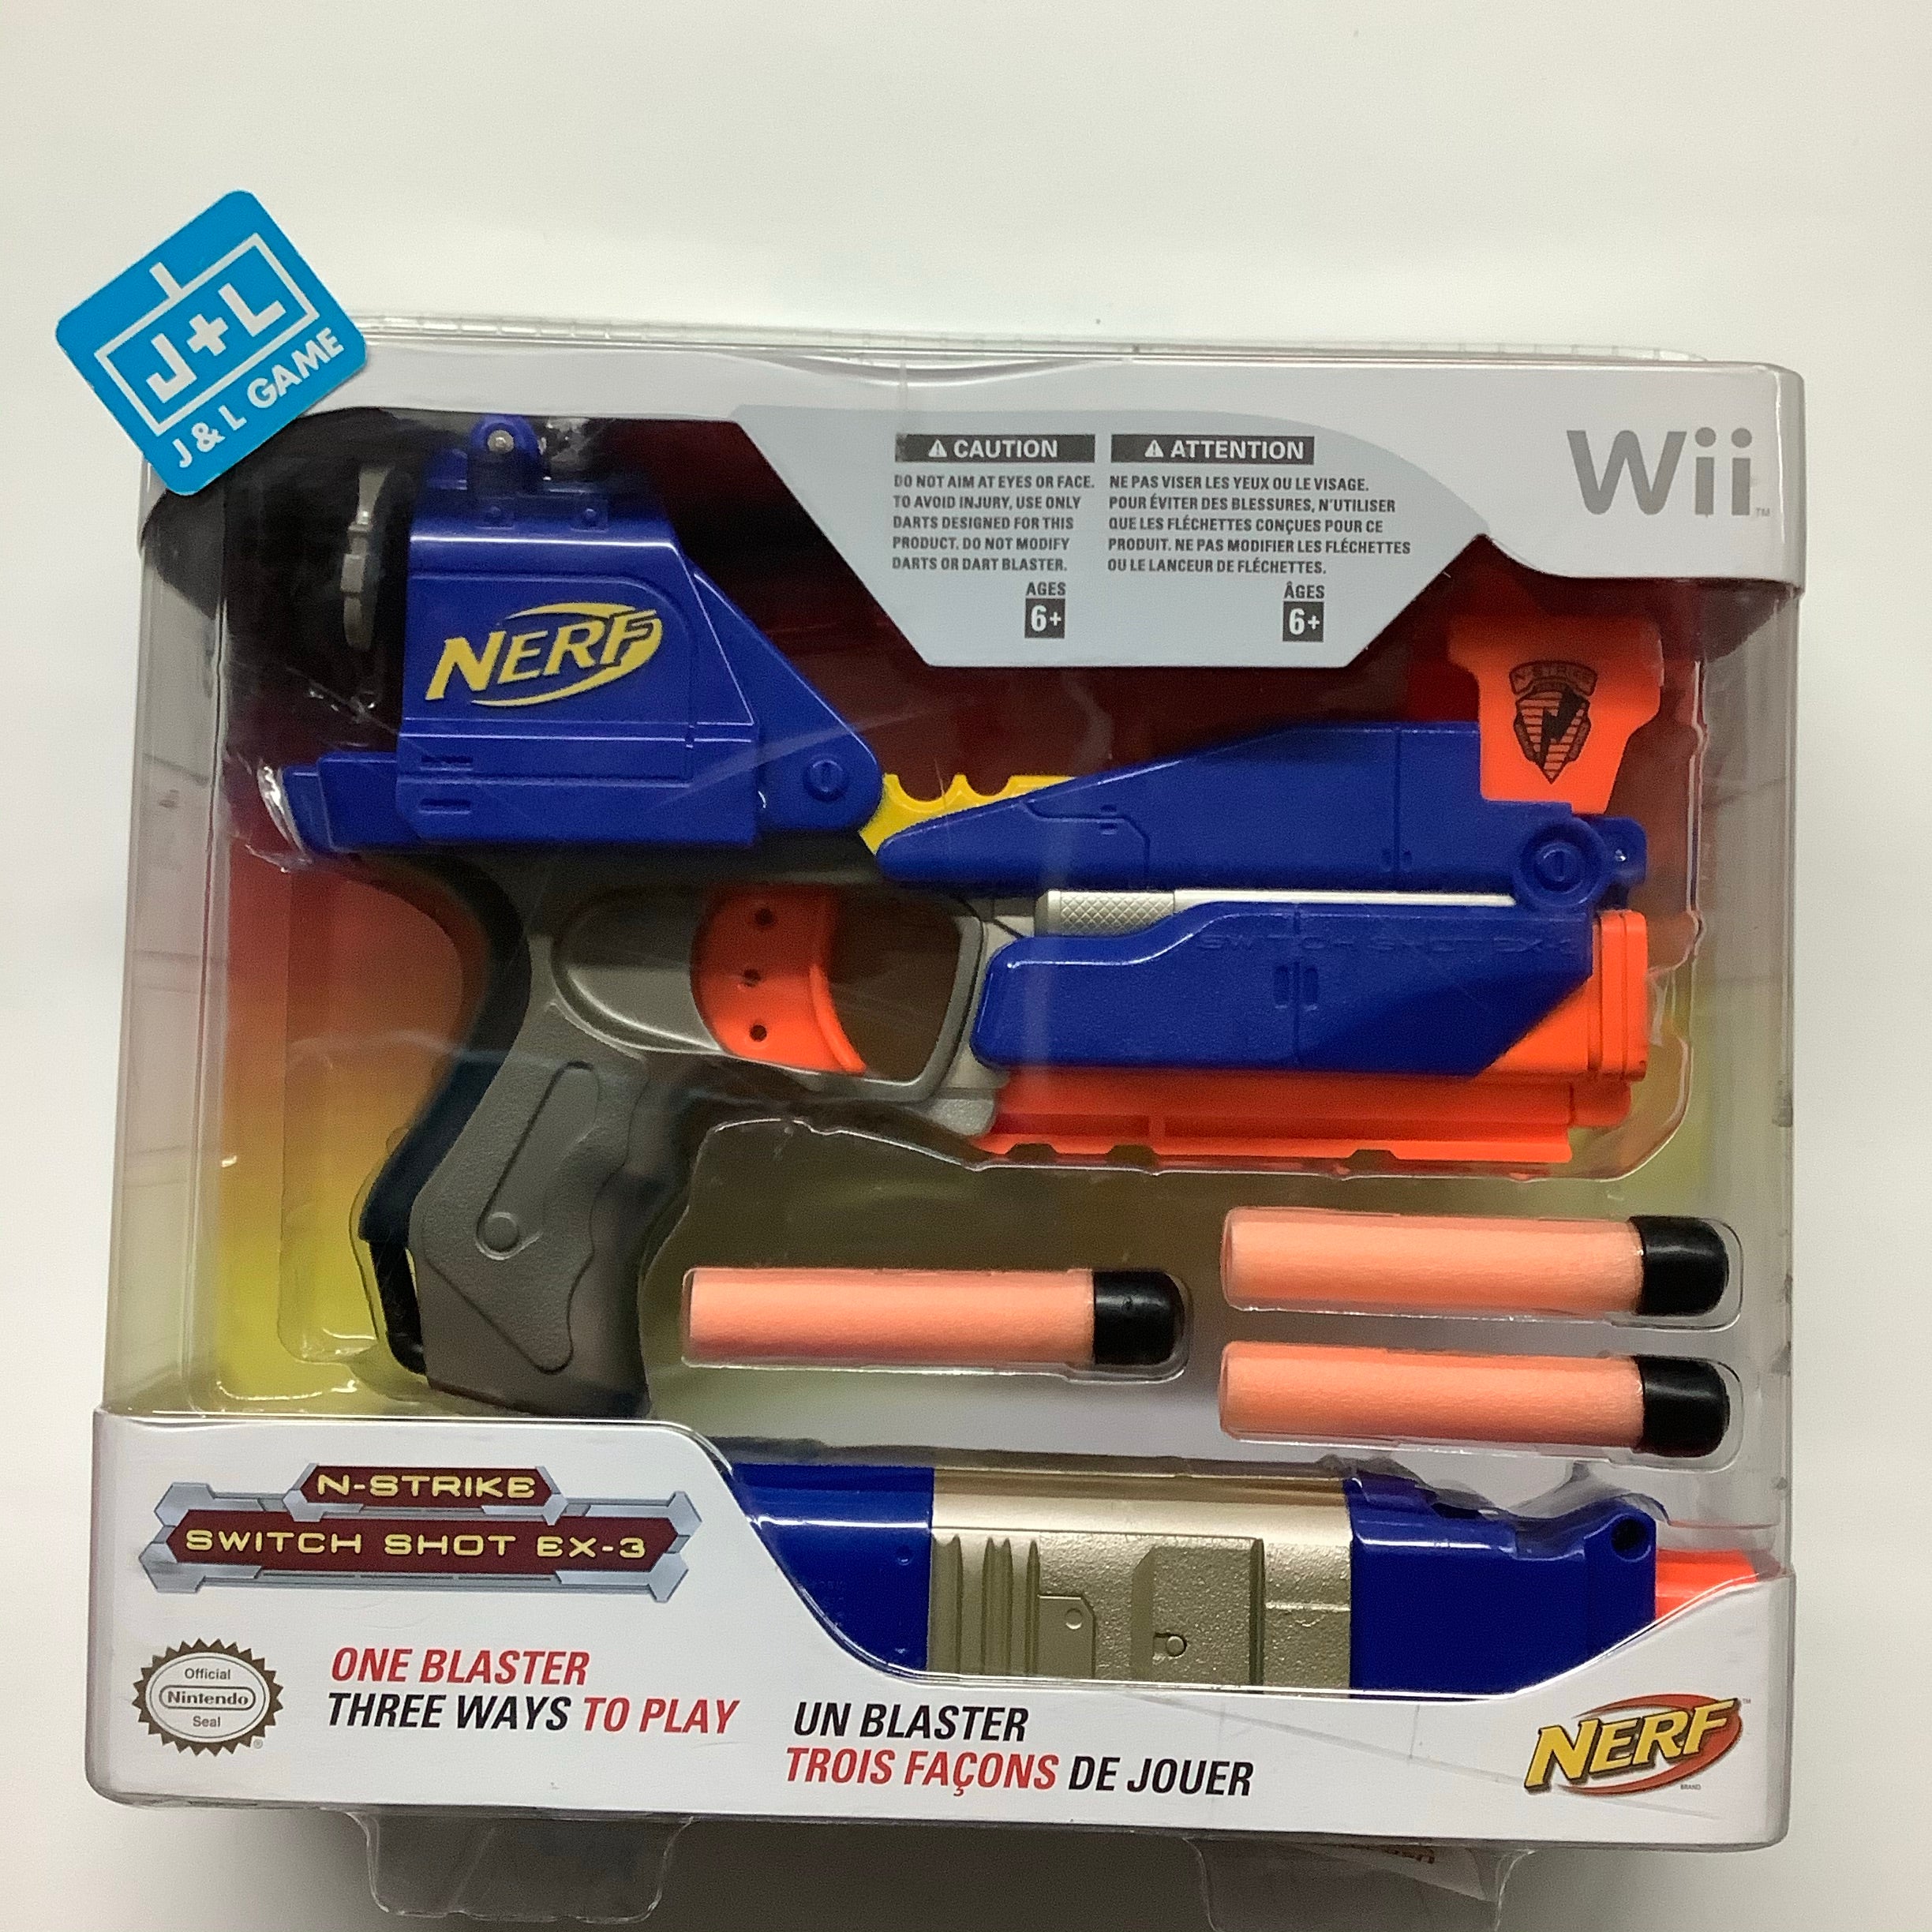 Nerf N-Strike Switch Shot EX-3 (No Game or Remote) - Nintendo Wii Accessories Hasbro   